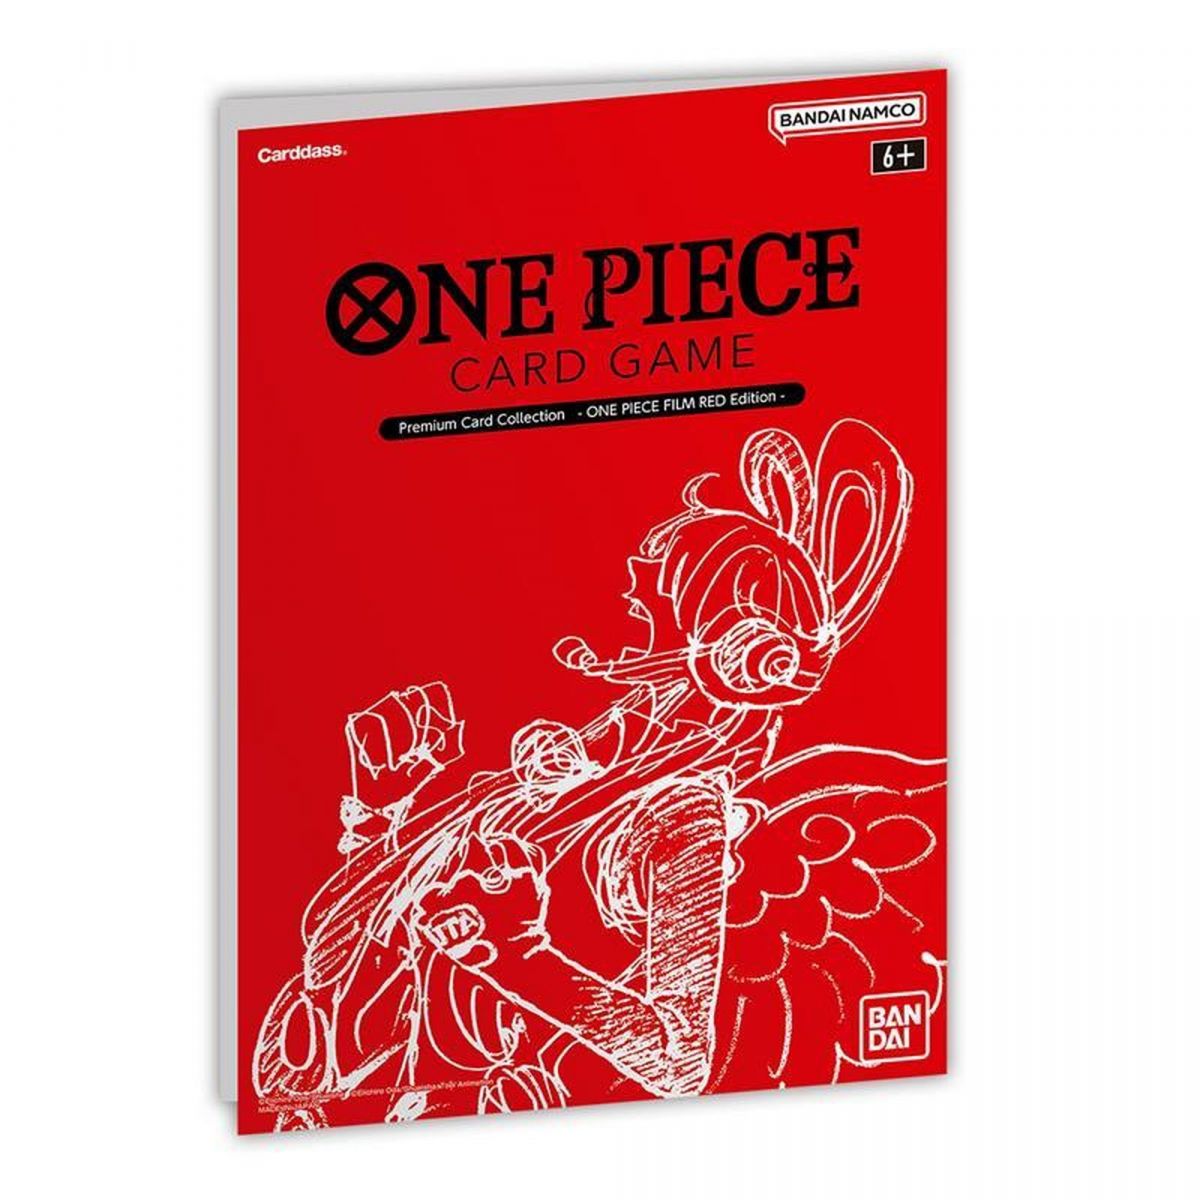 One Piece CG - Box Set - Premium Card Collection - Film Red Edition - EN